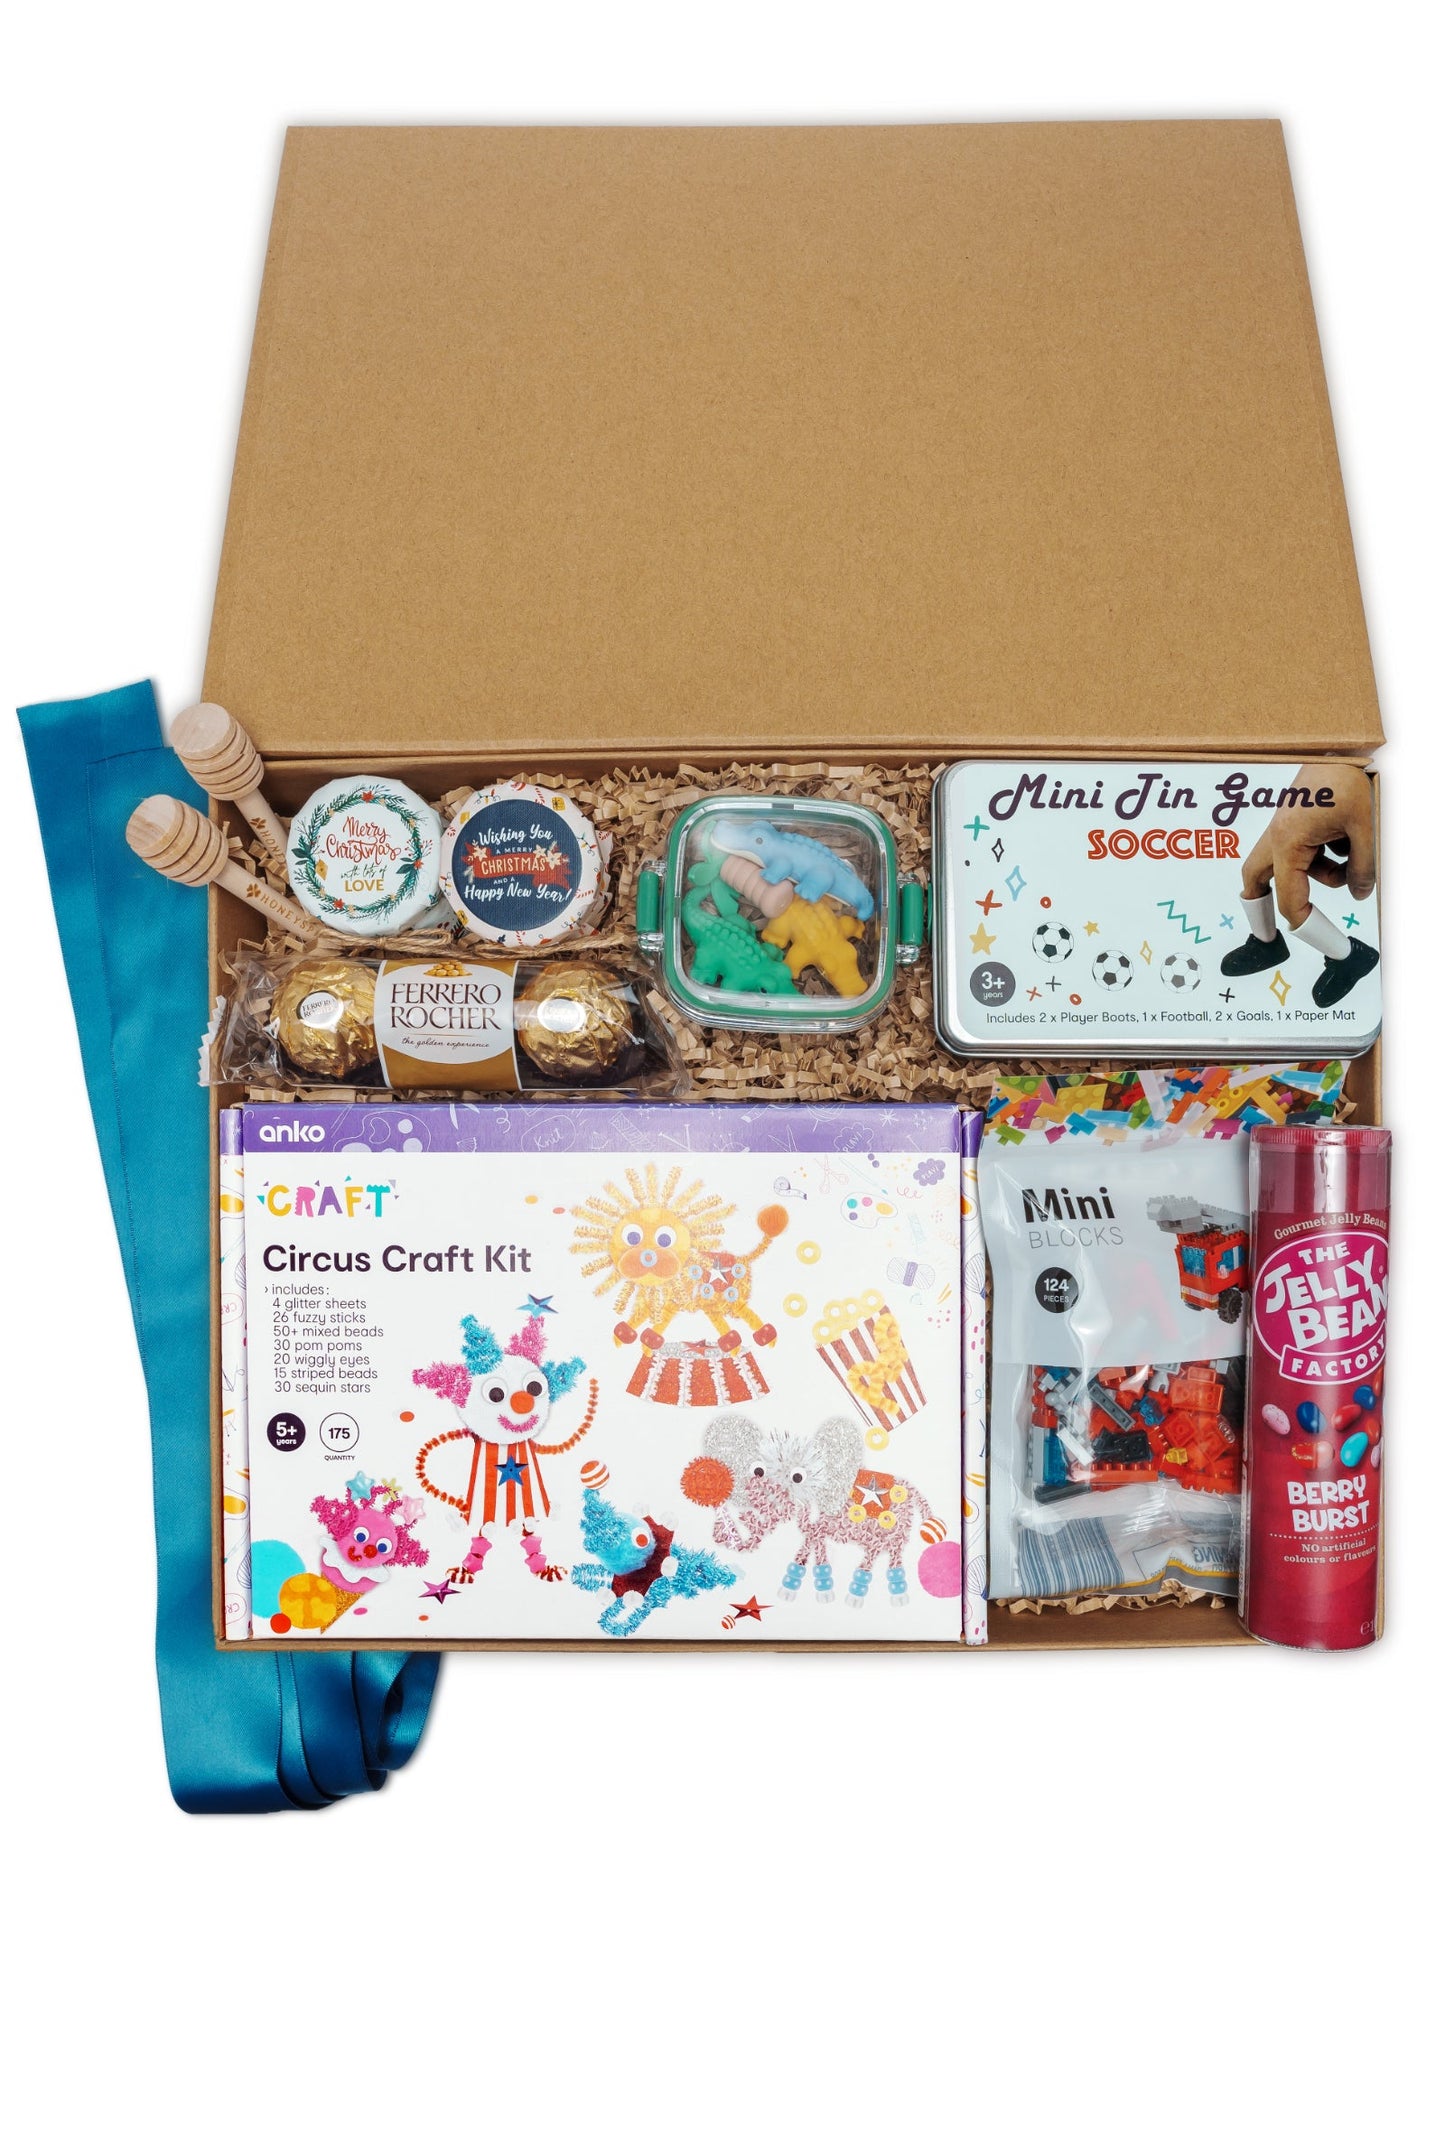 Boys Craft Gift Box | Premium Gift Boxes under $50